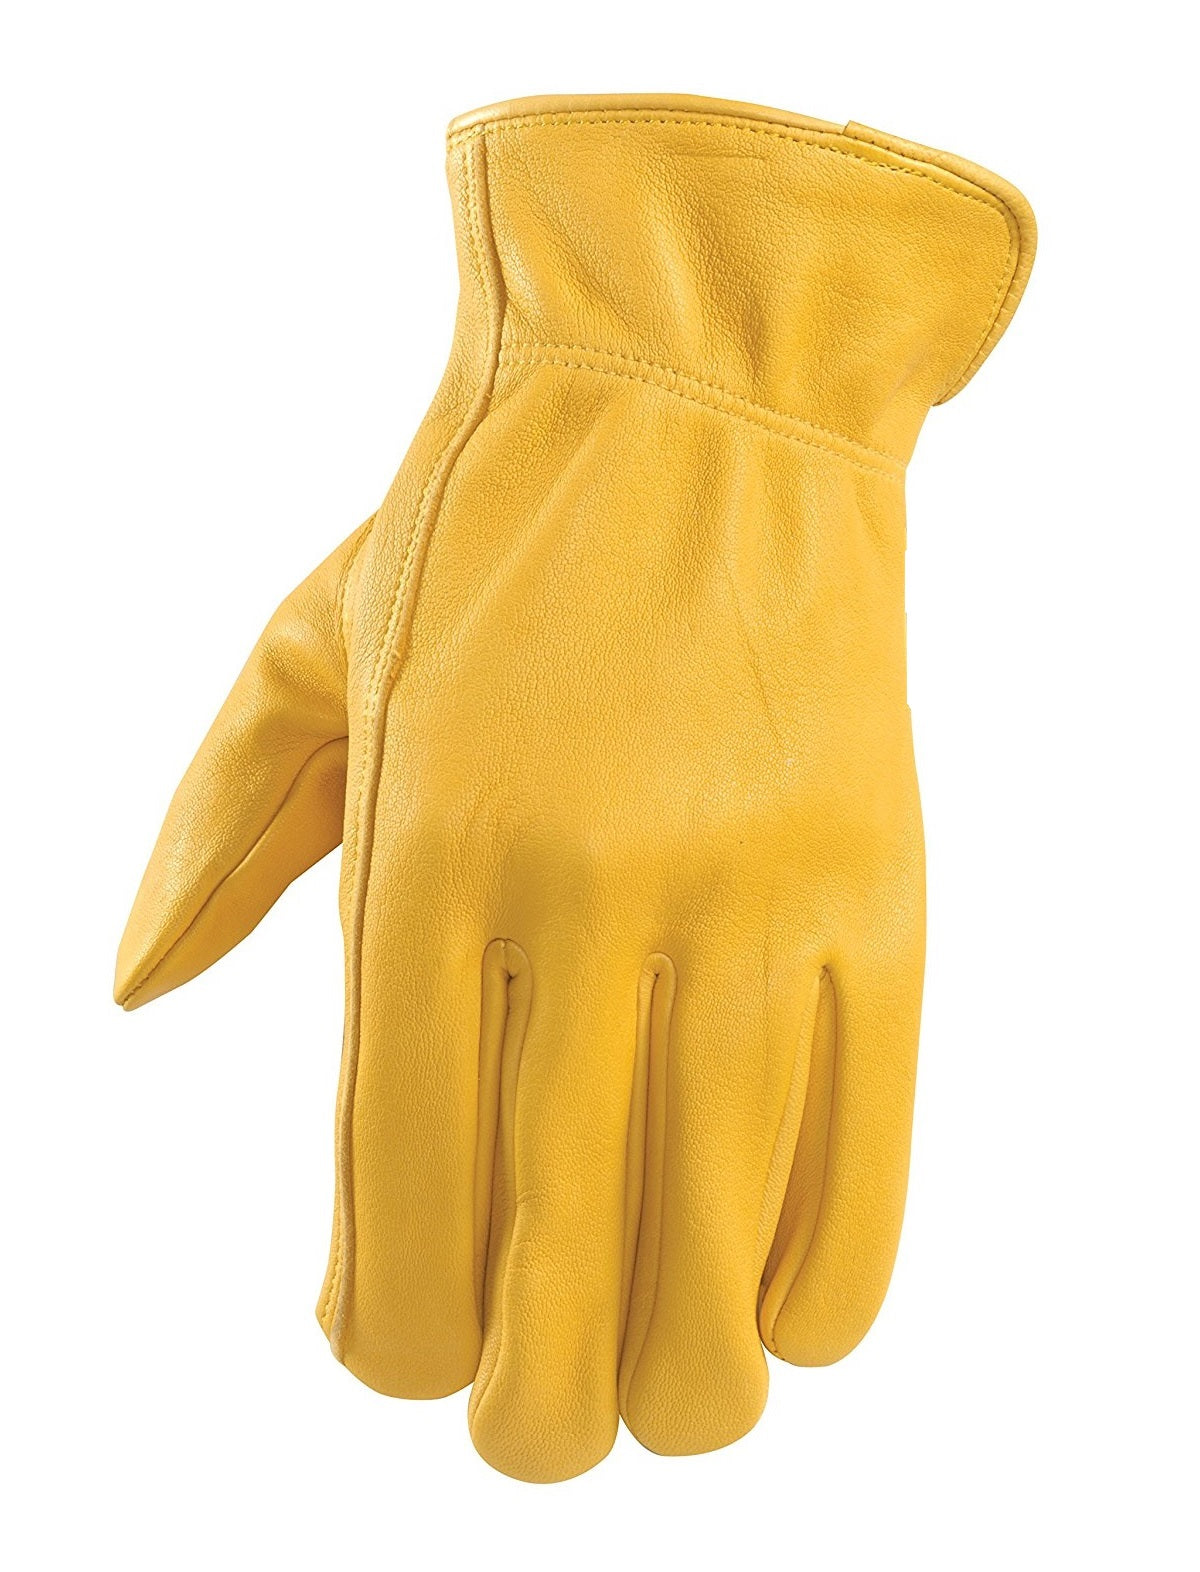 Wells Lamont 984MC Men's Leather Driver Gloves, Medium, Yellow